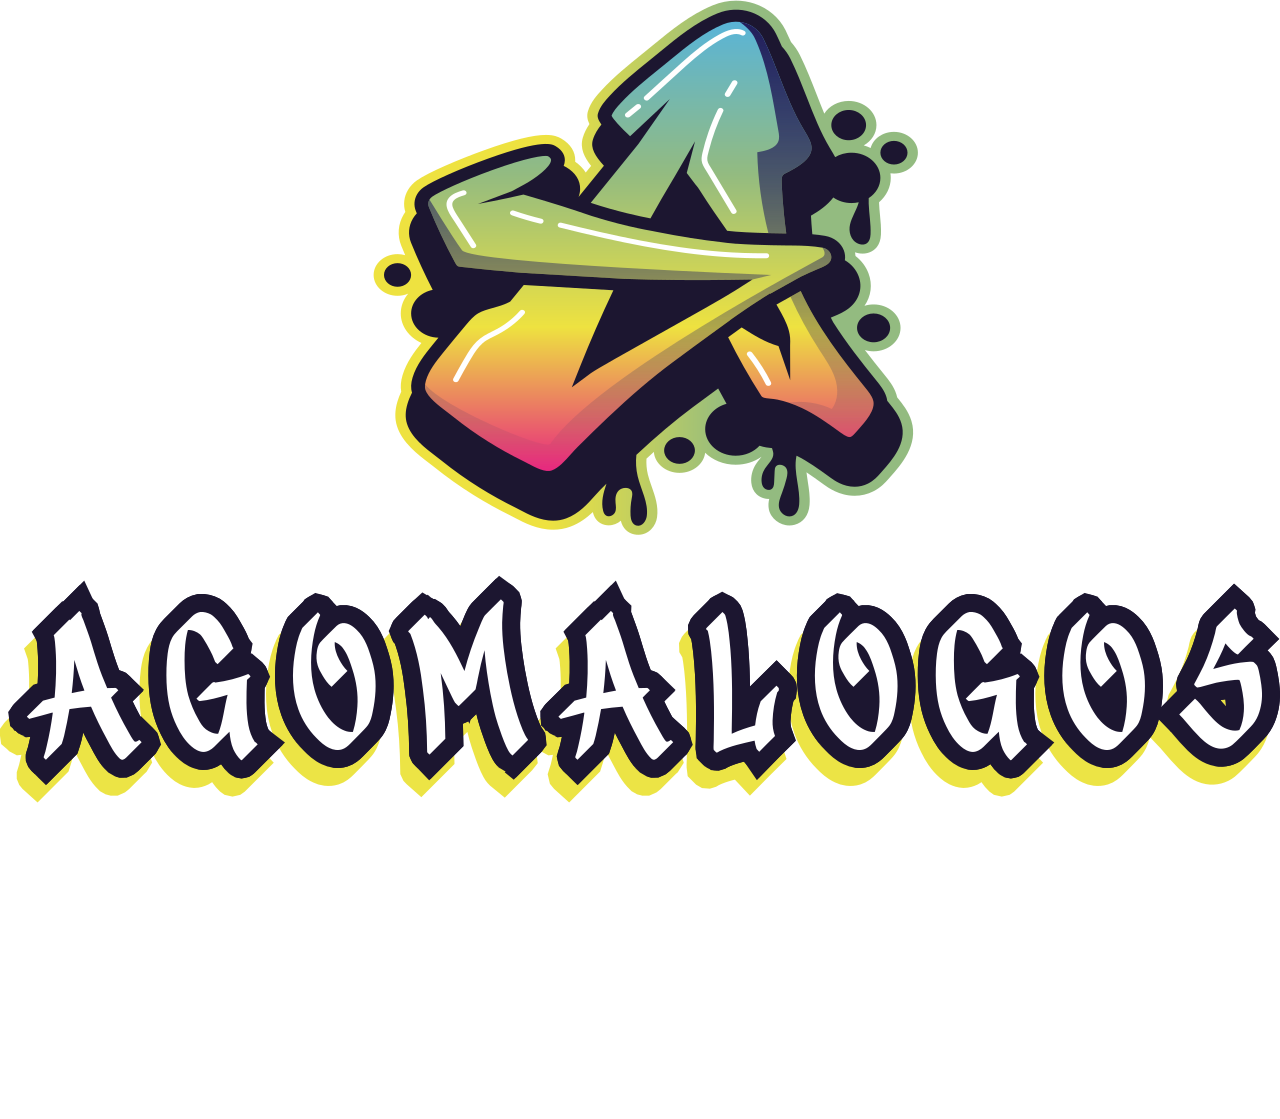 Agomalogos's web page